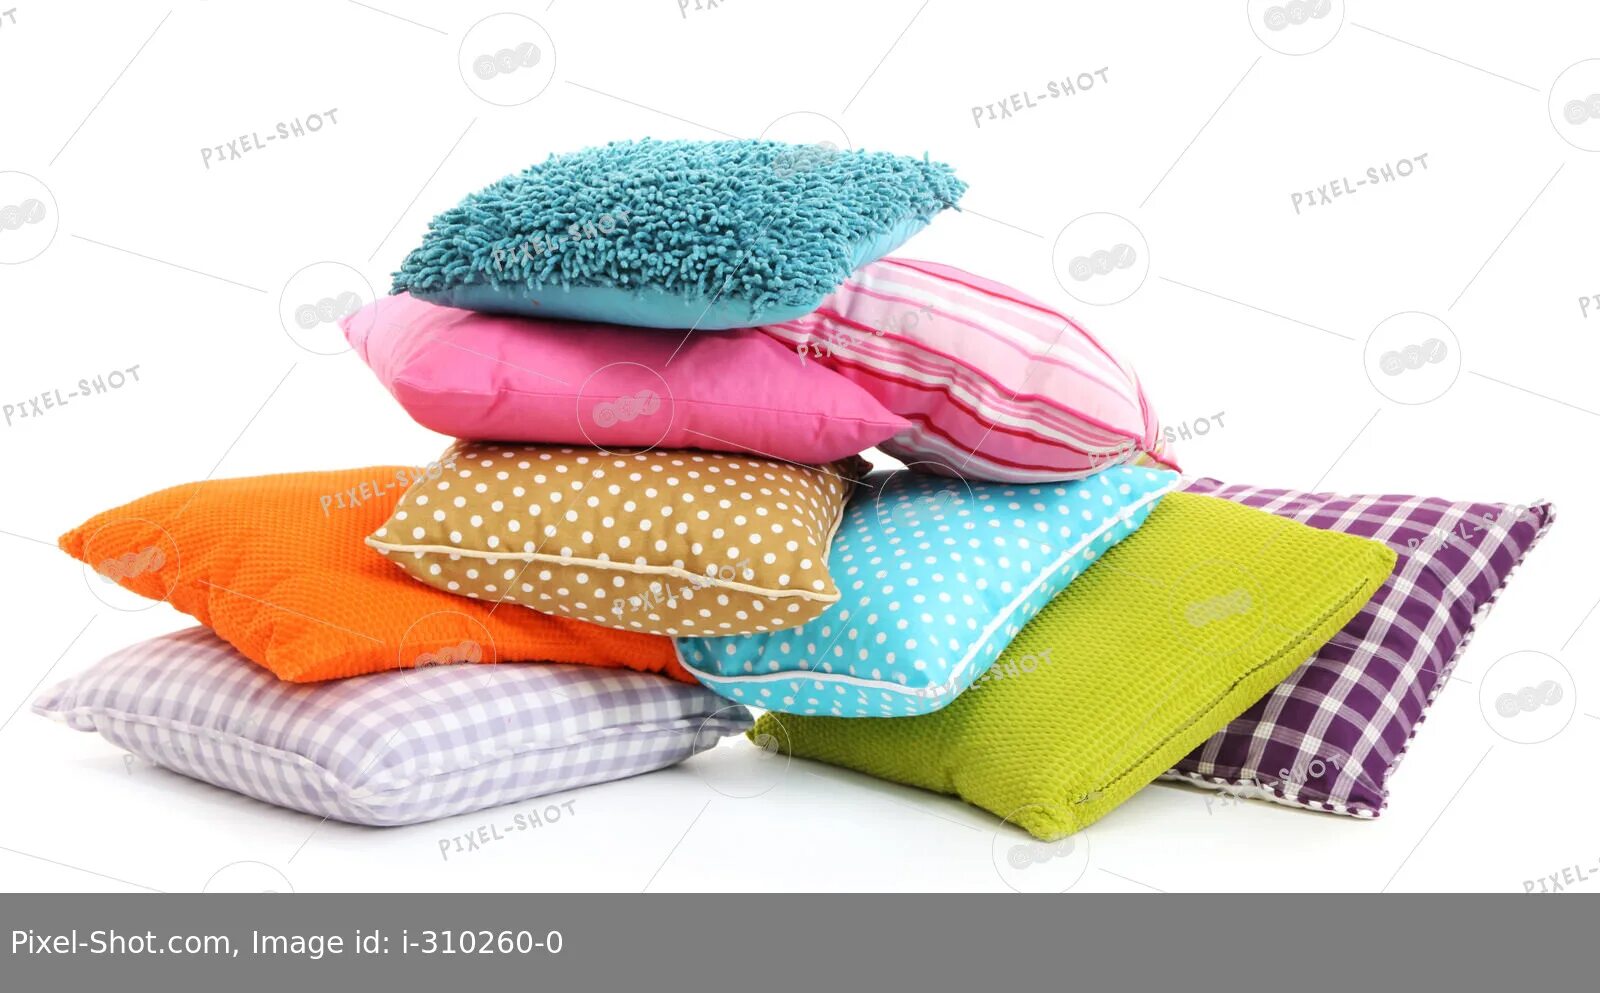 Подушка полотенце. Текстиль подушки полотенца пледы. Подушка полотенце покрывало. Домашний текстиль, подушки, полотенца набором на прозрачном фоне. Постельное белье, подушки, полотенца на прозрачном фоне.